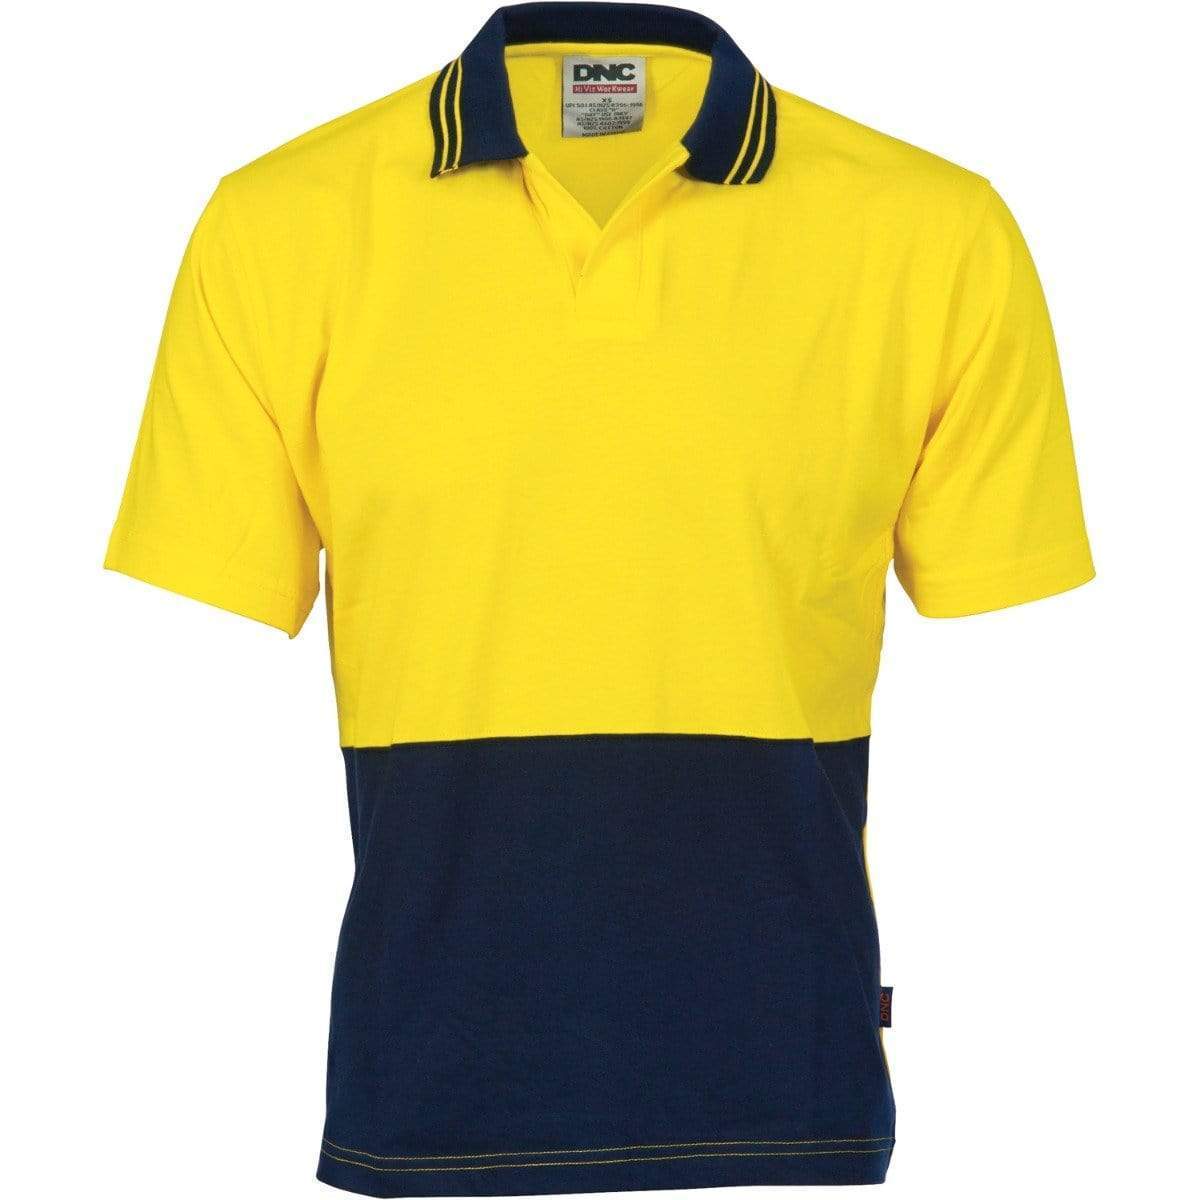 Dnc Workwear Hi-vis Cool Breeze Cotton Jersey Food Industry Short Sleeve Polo - 3905 Work Wear DNC Workwear Yellow/Navy XS 